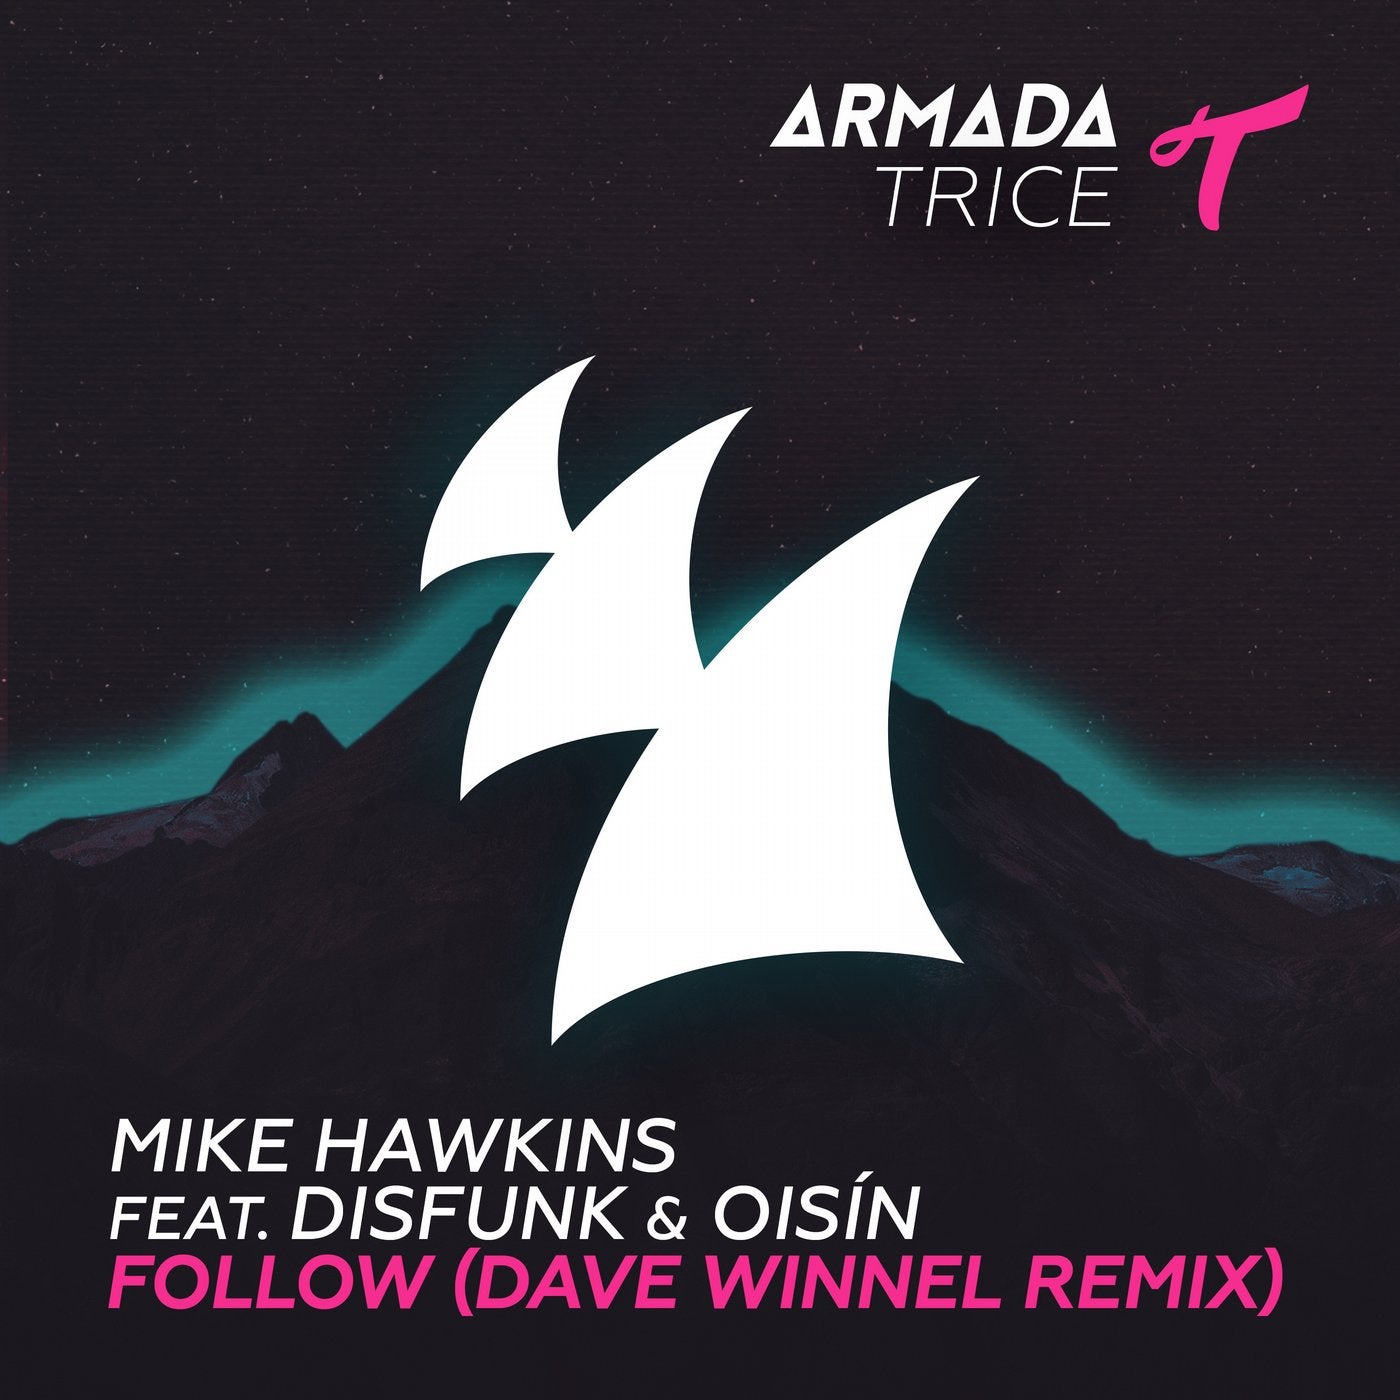 Follow - Dave Winnel Remix